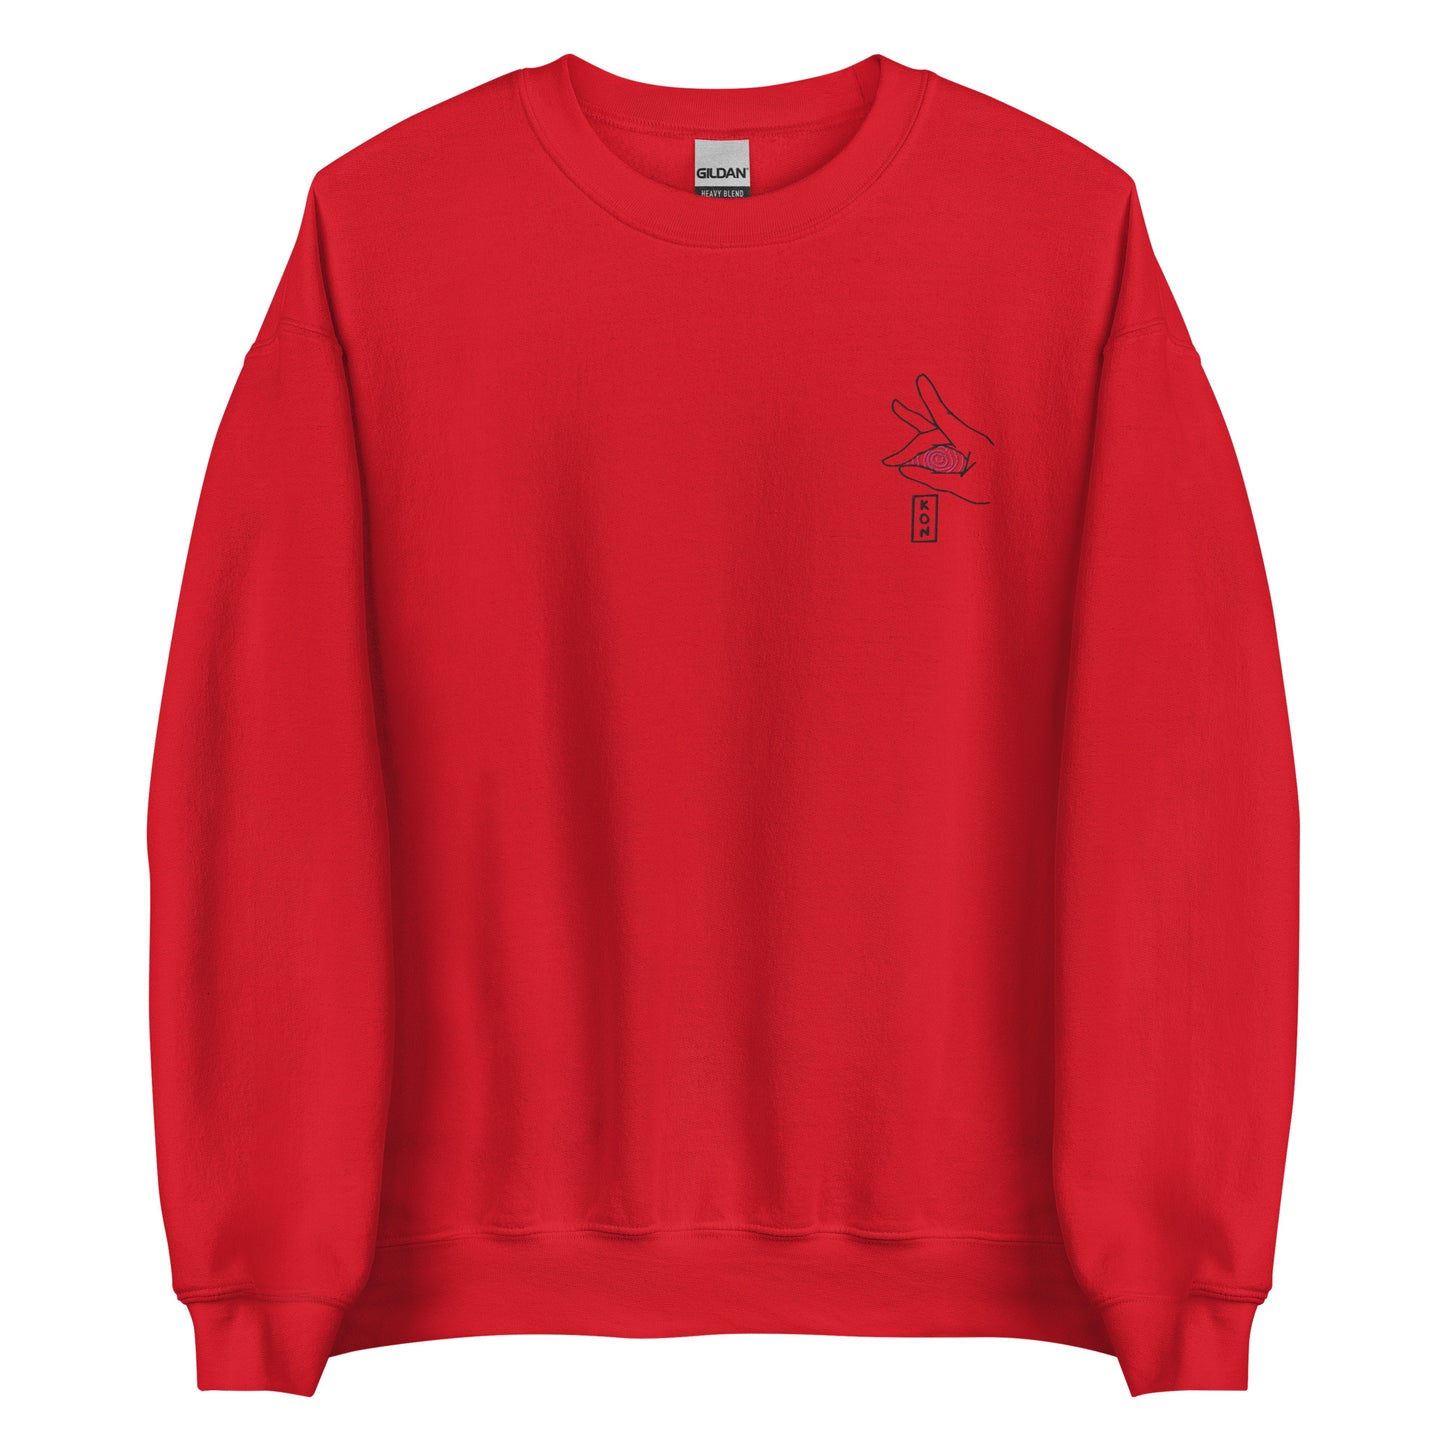 Kon fox pocket embroidered Sweatshirt